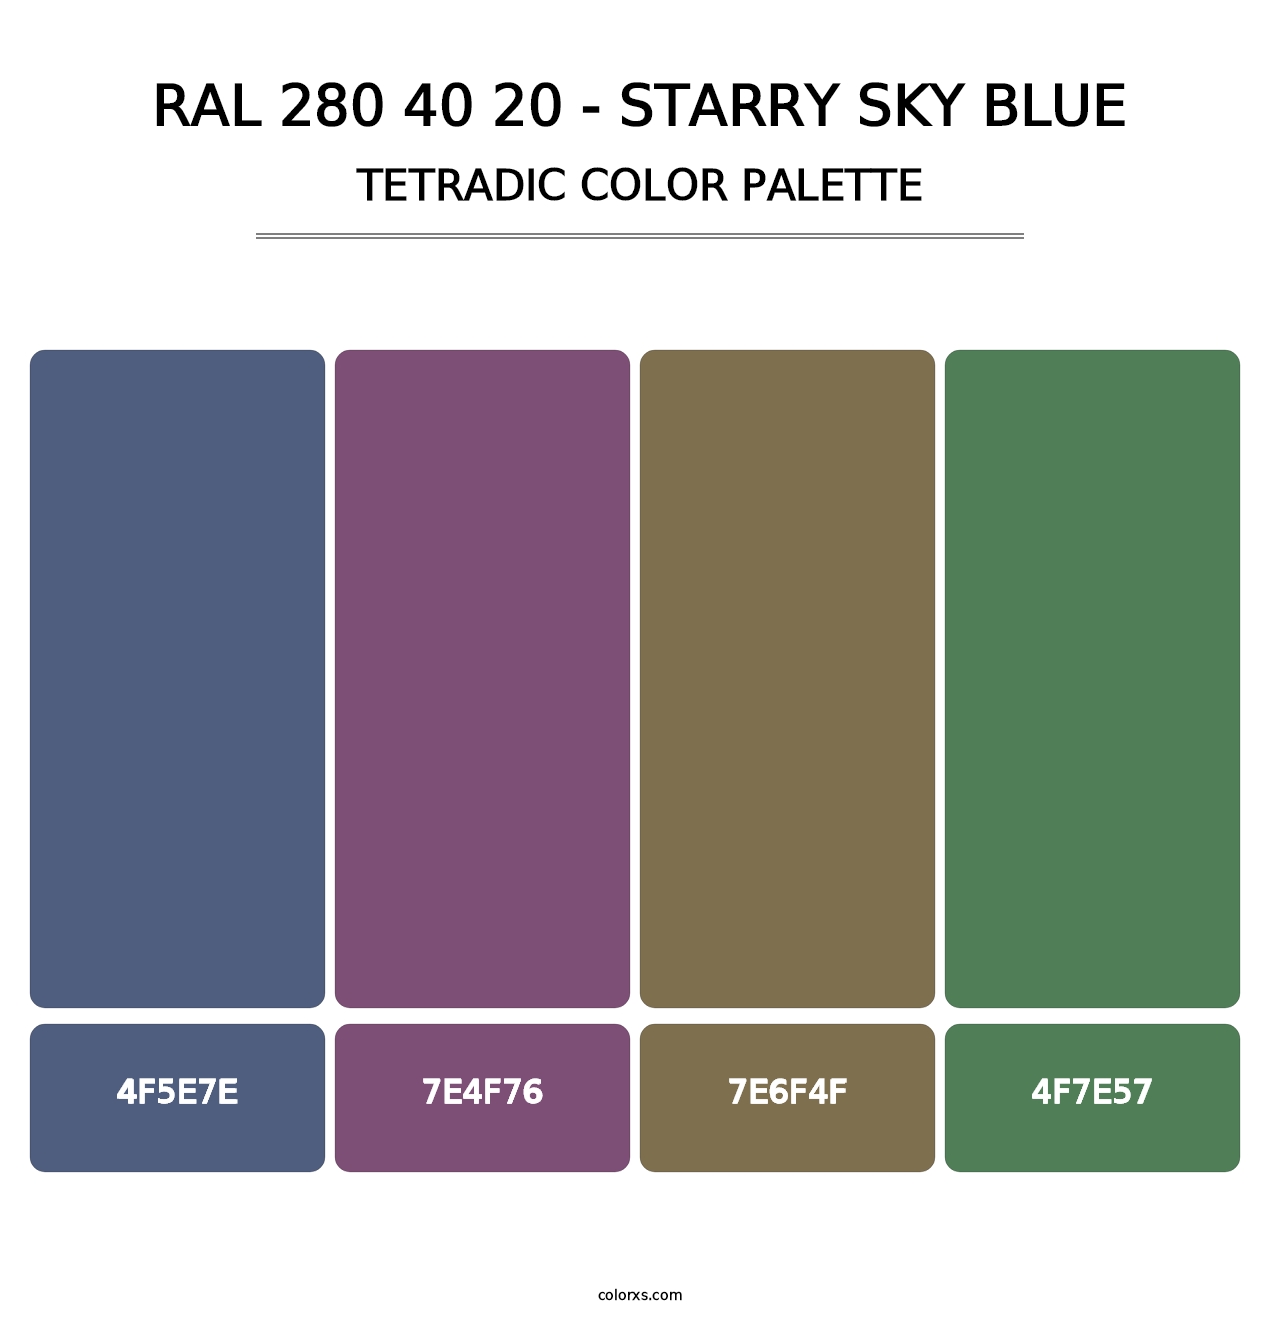 RAL 280 40 20 - Starry Sky Blue - Tetradic Color Palette